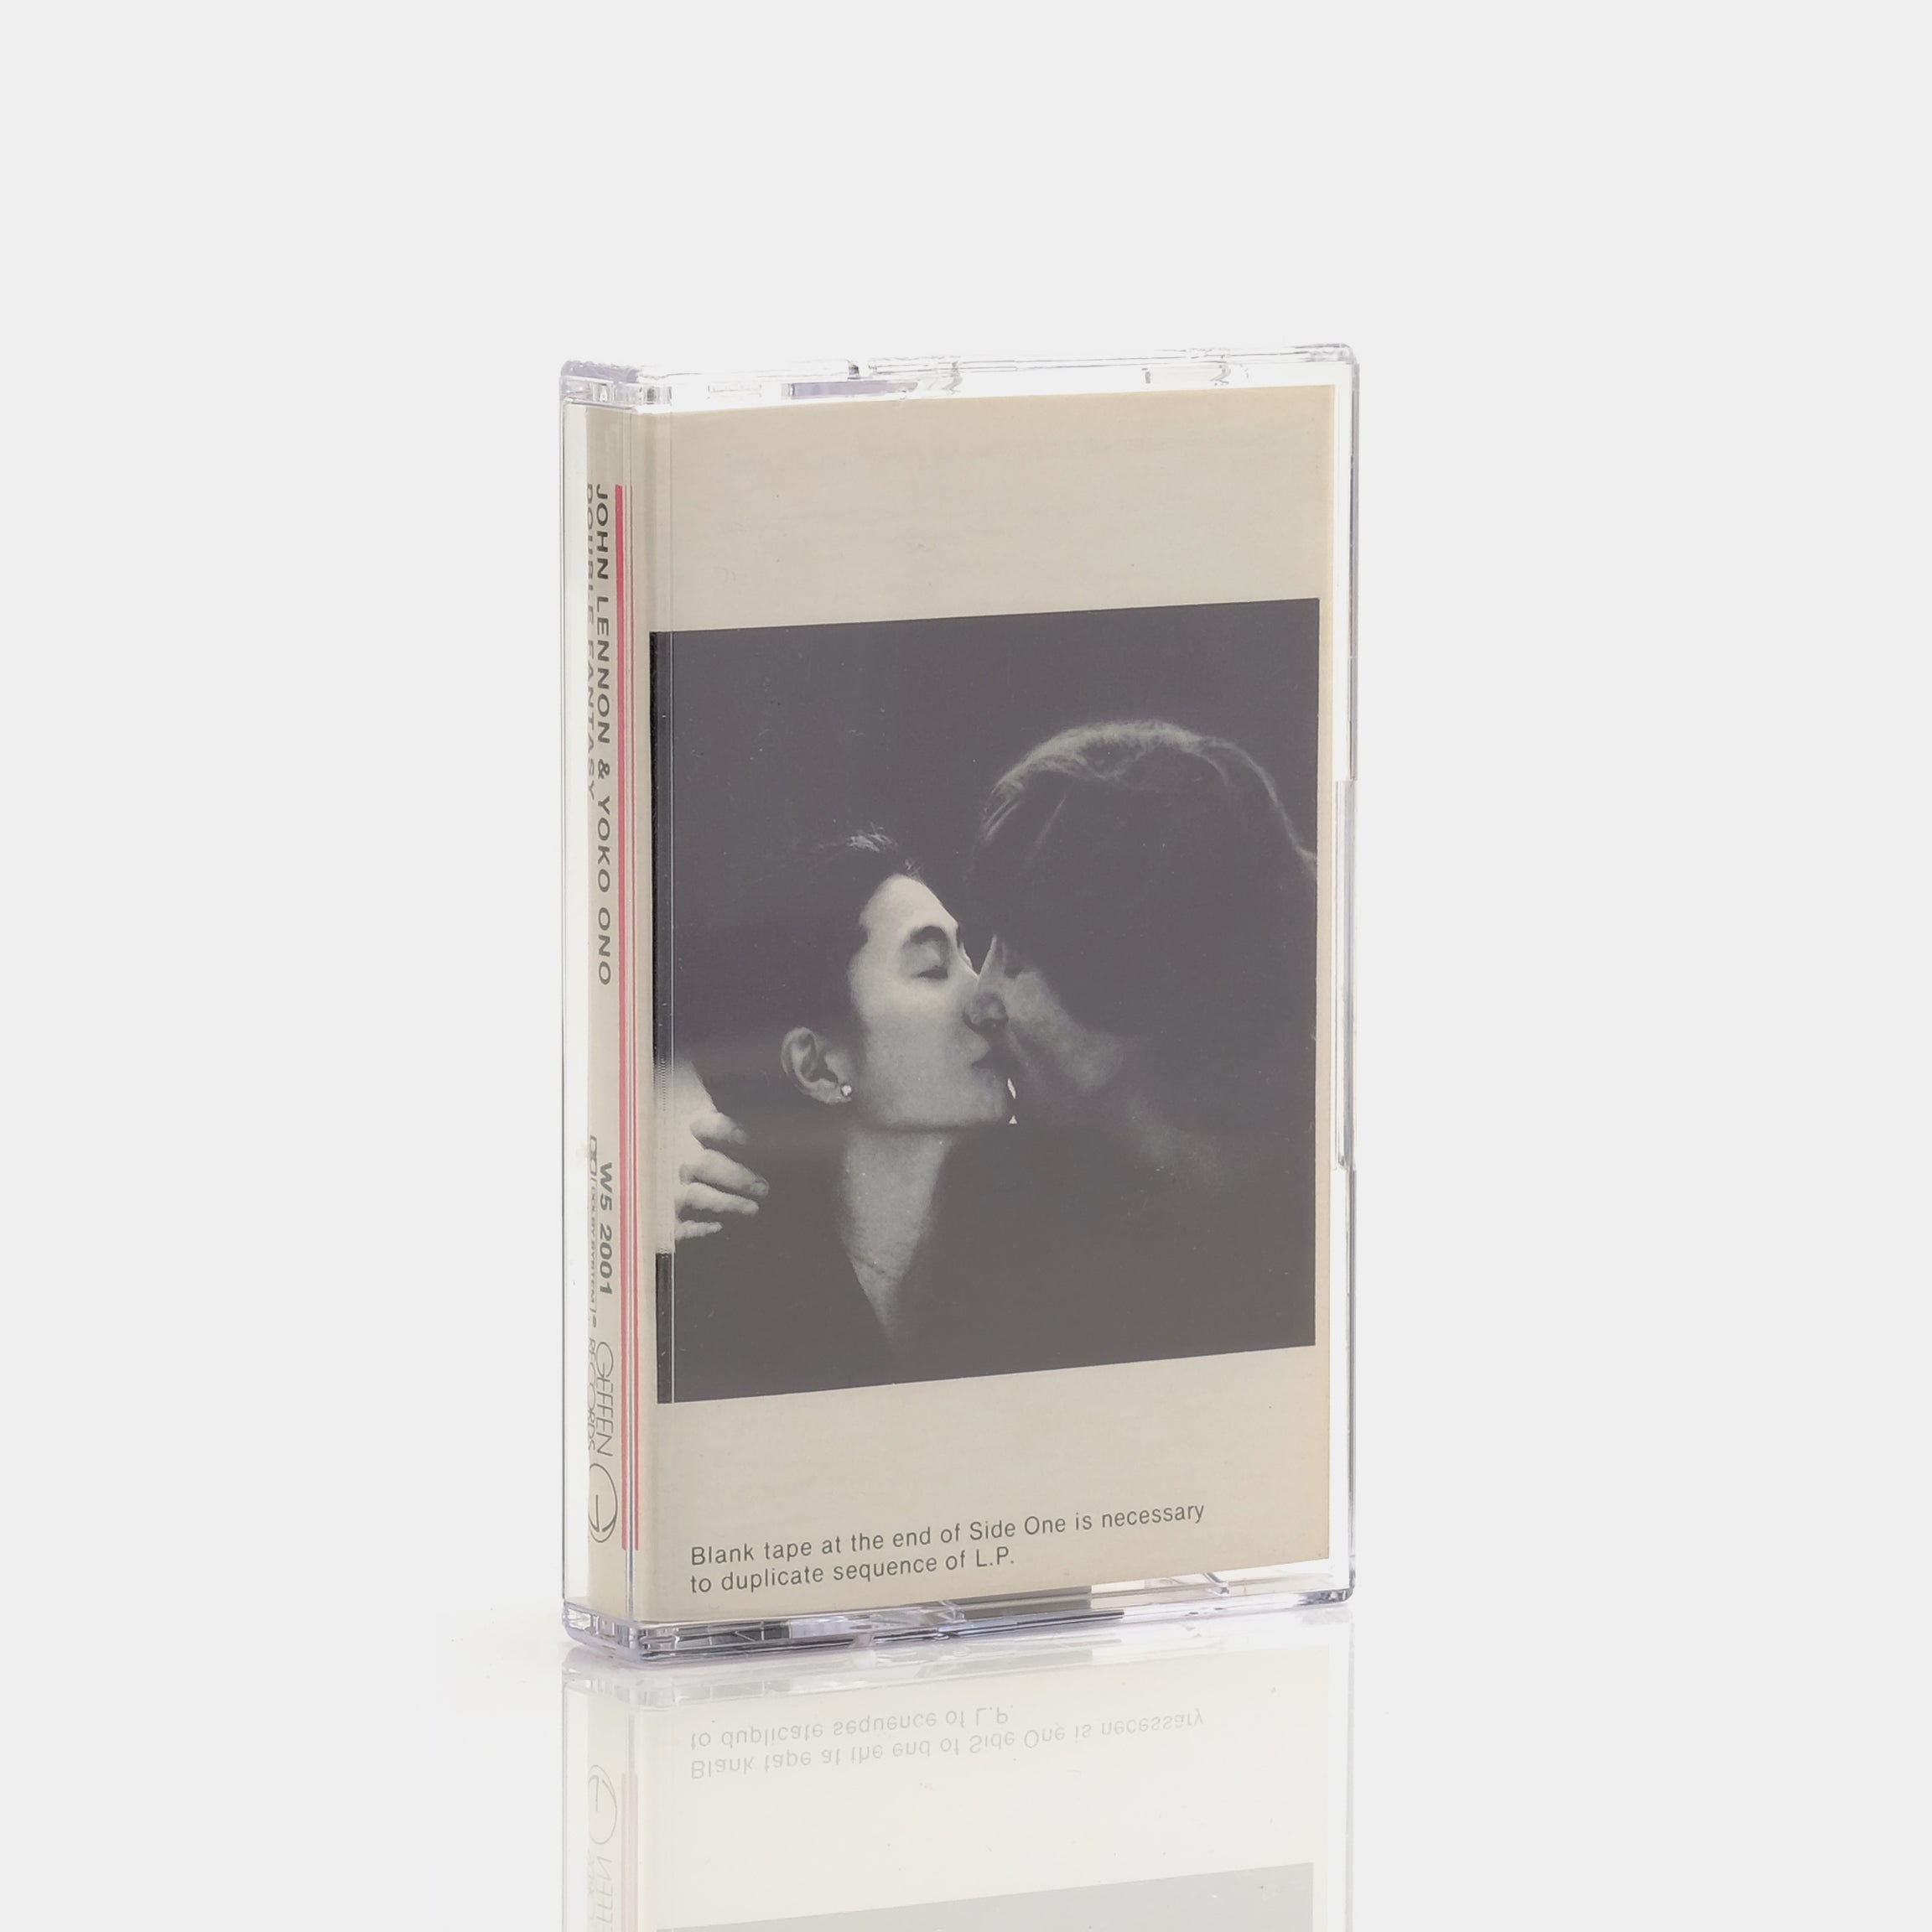 John Lennon & Yoko Ono - Double Fantasy Cassette Tape